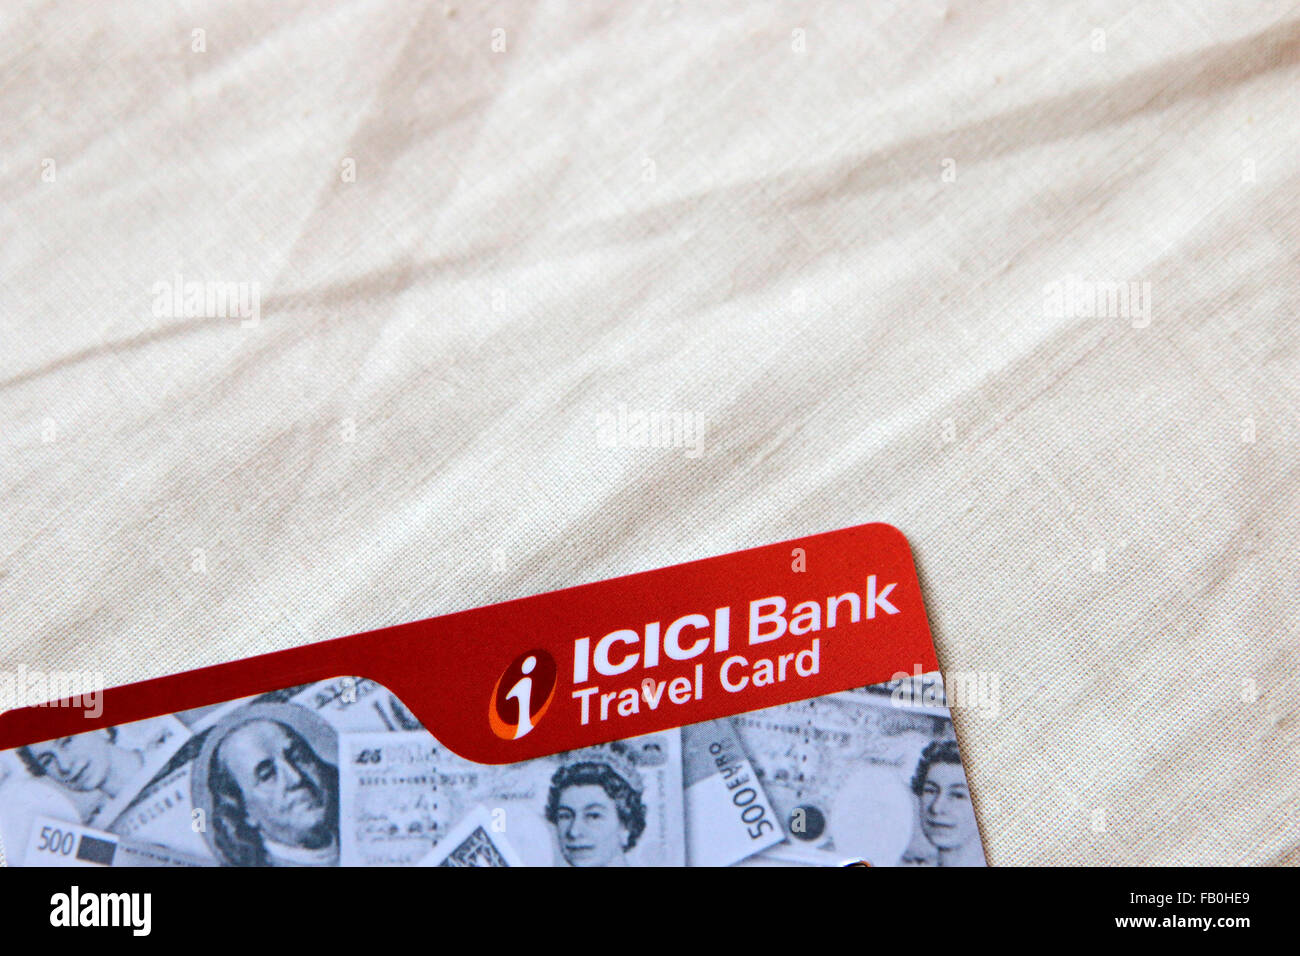 ICICI Bank - Travel Card Stock Photo